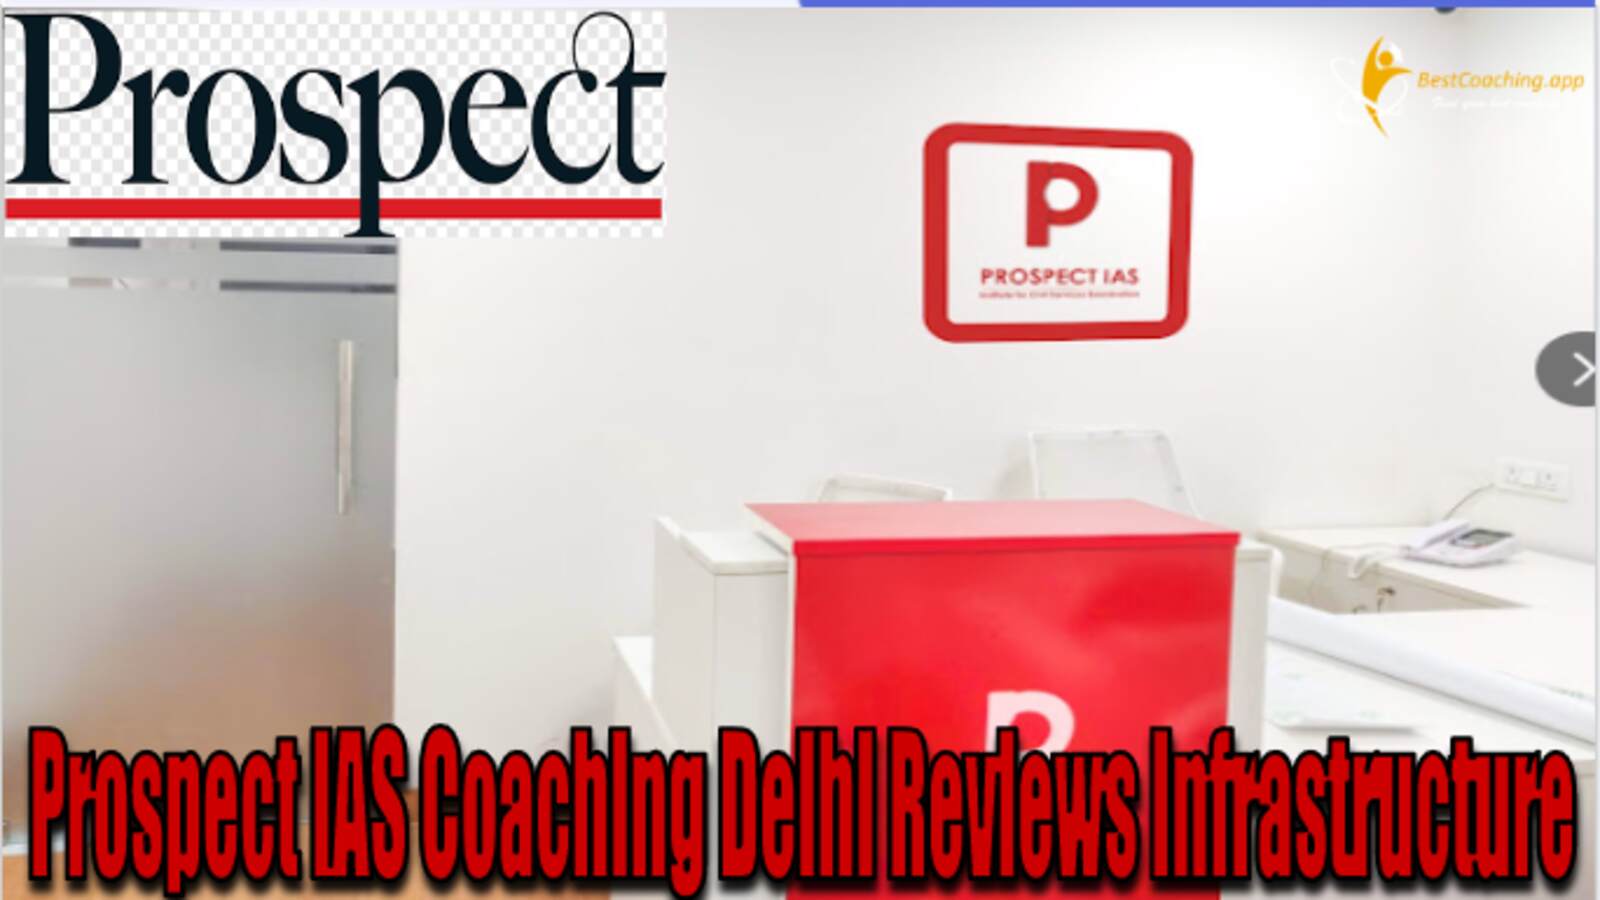 Prospect IAS Coaching Delhi Reviews